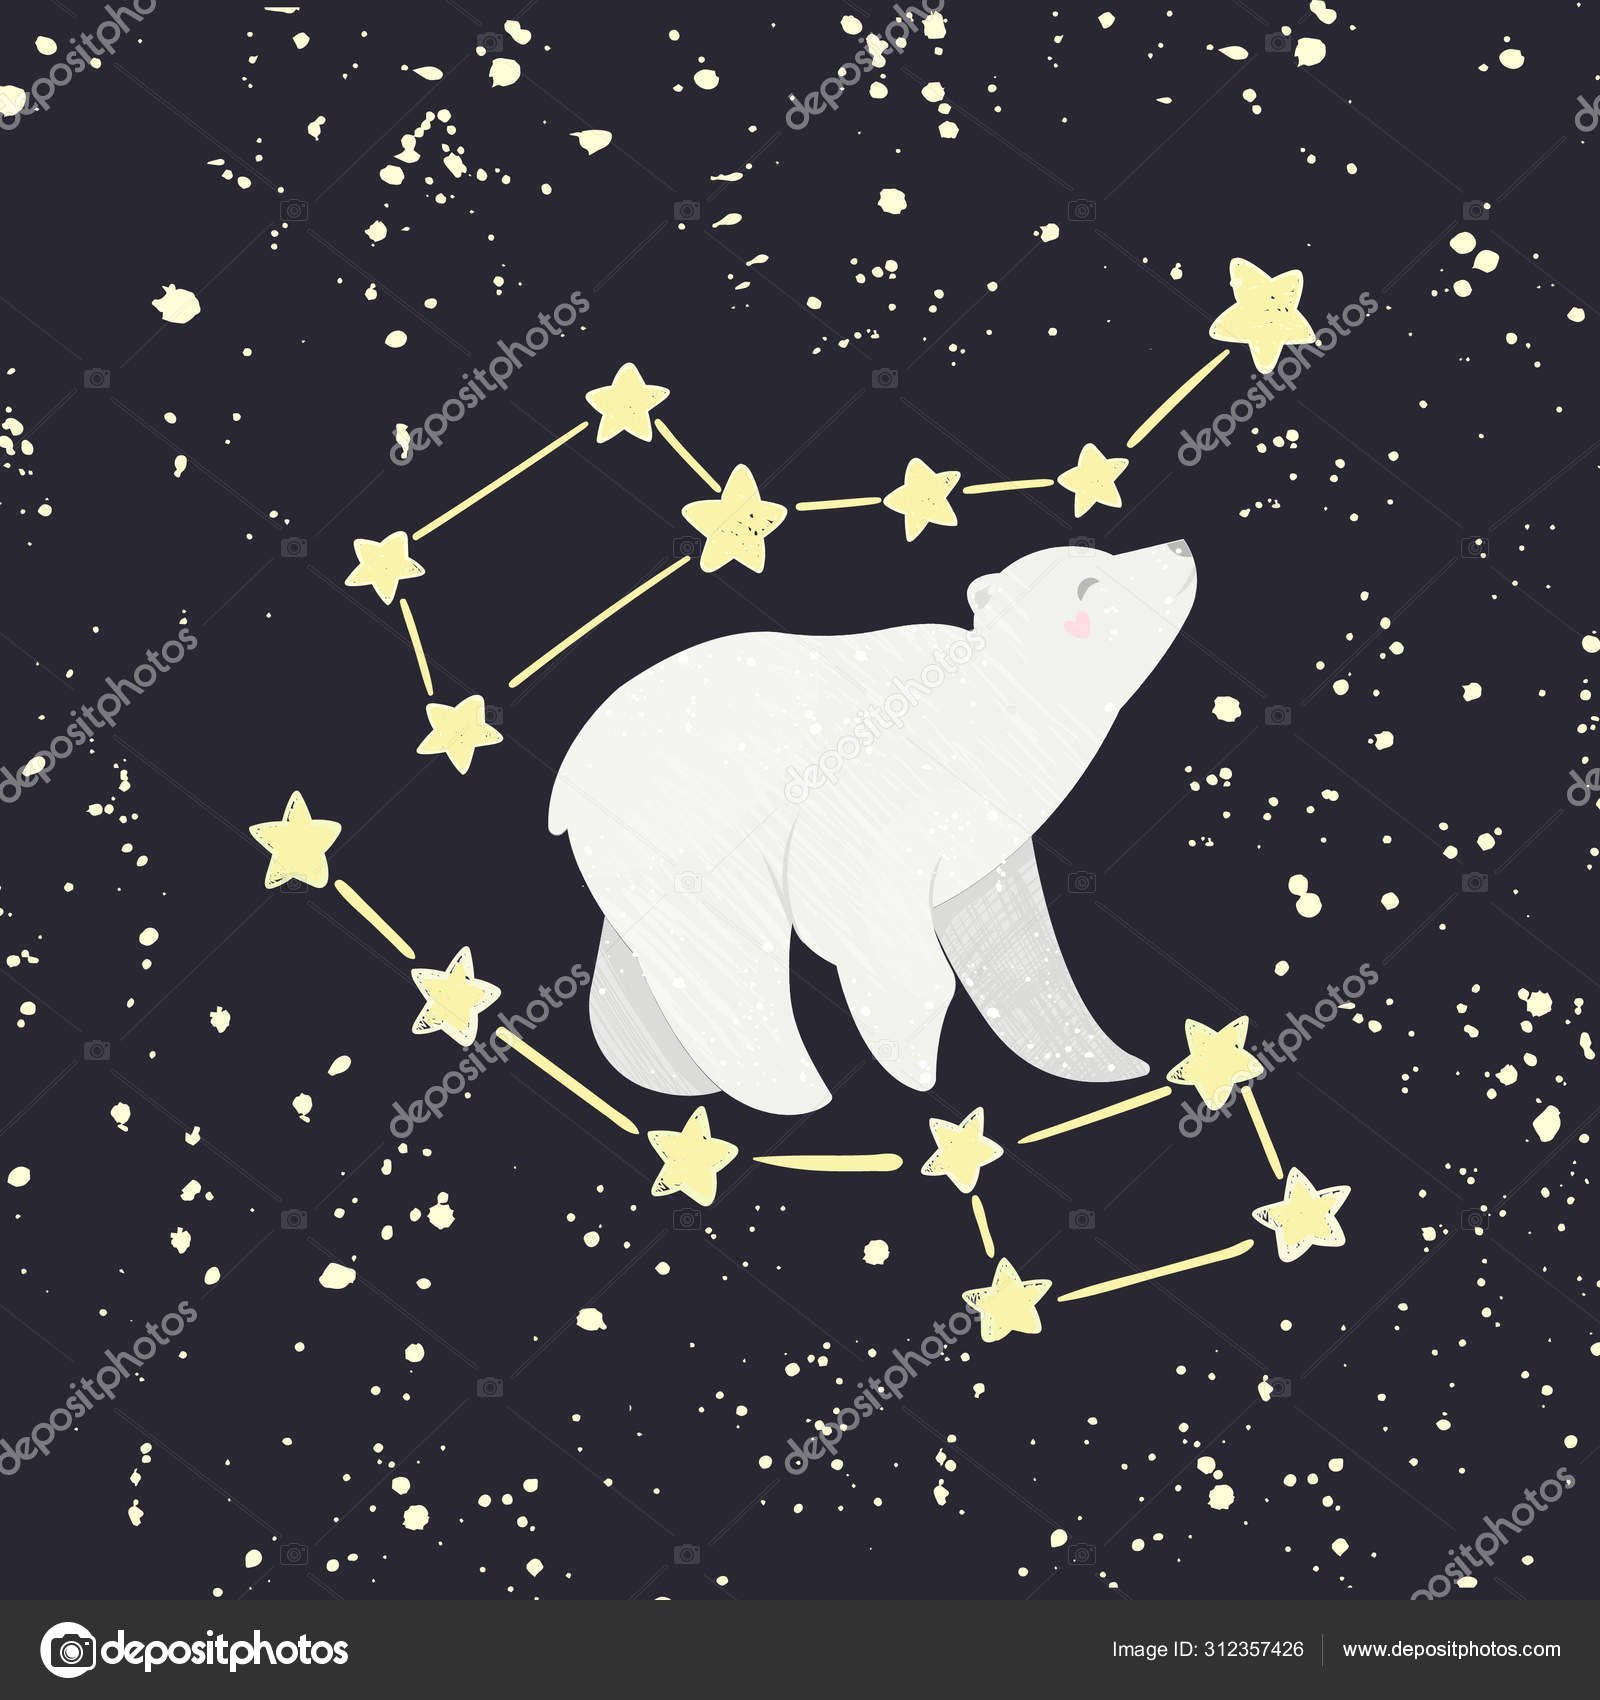 созвездие медведицы картинки